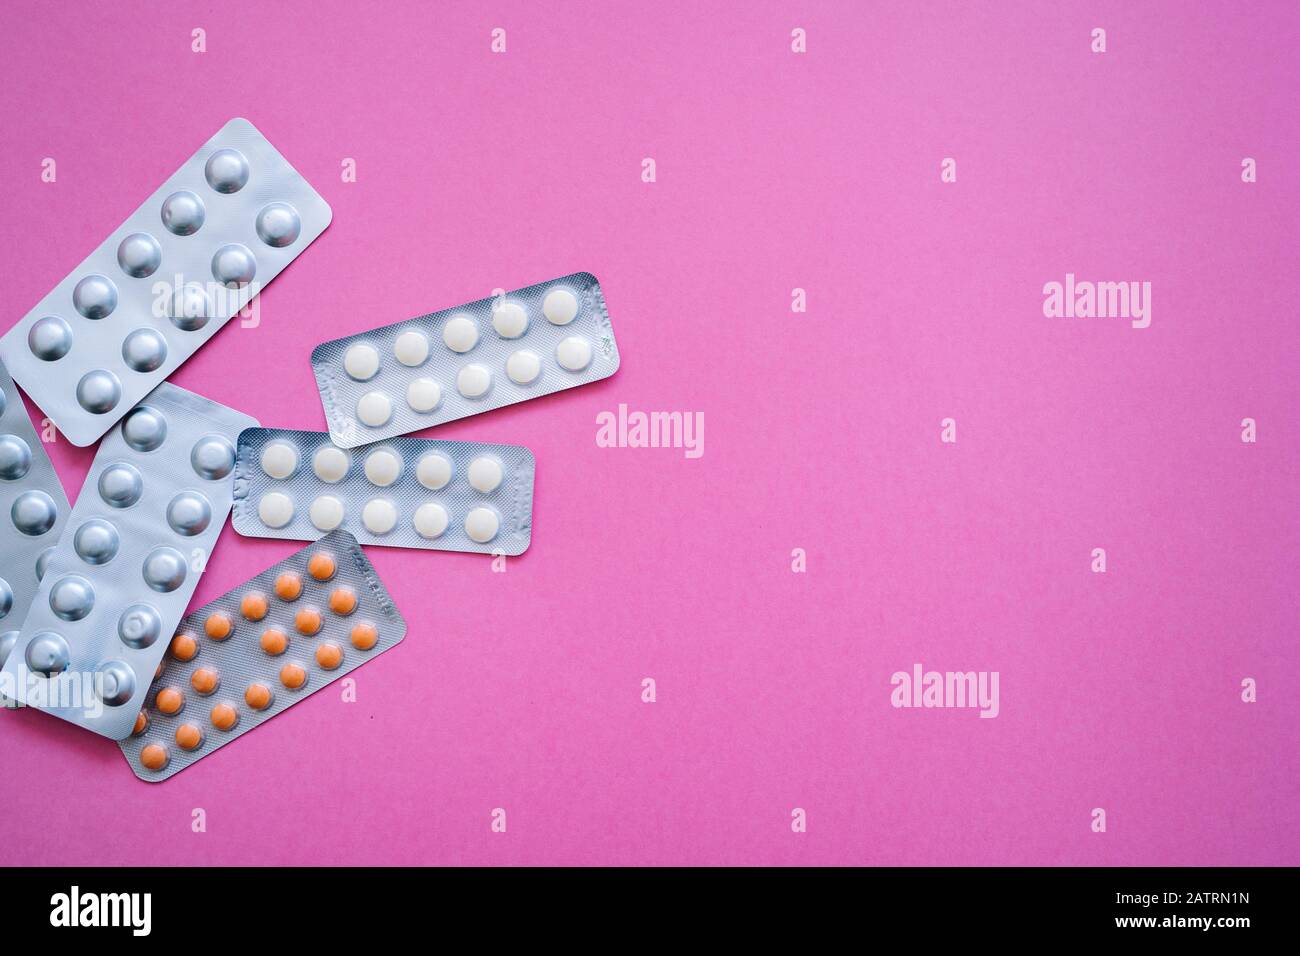 Verschiedene Medikamente - Aluminium-Blister-Tabletten mit Vitaminen, Tabletten, Kapseln auf pinkfarbenem Hintergrund. Pharmazeutisches Antibiotikum, Medikament. Pharma Stockfoto